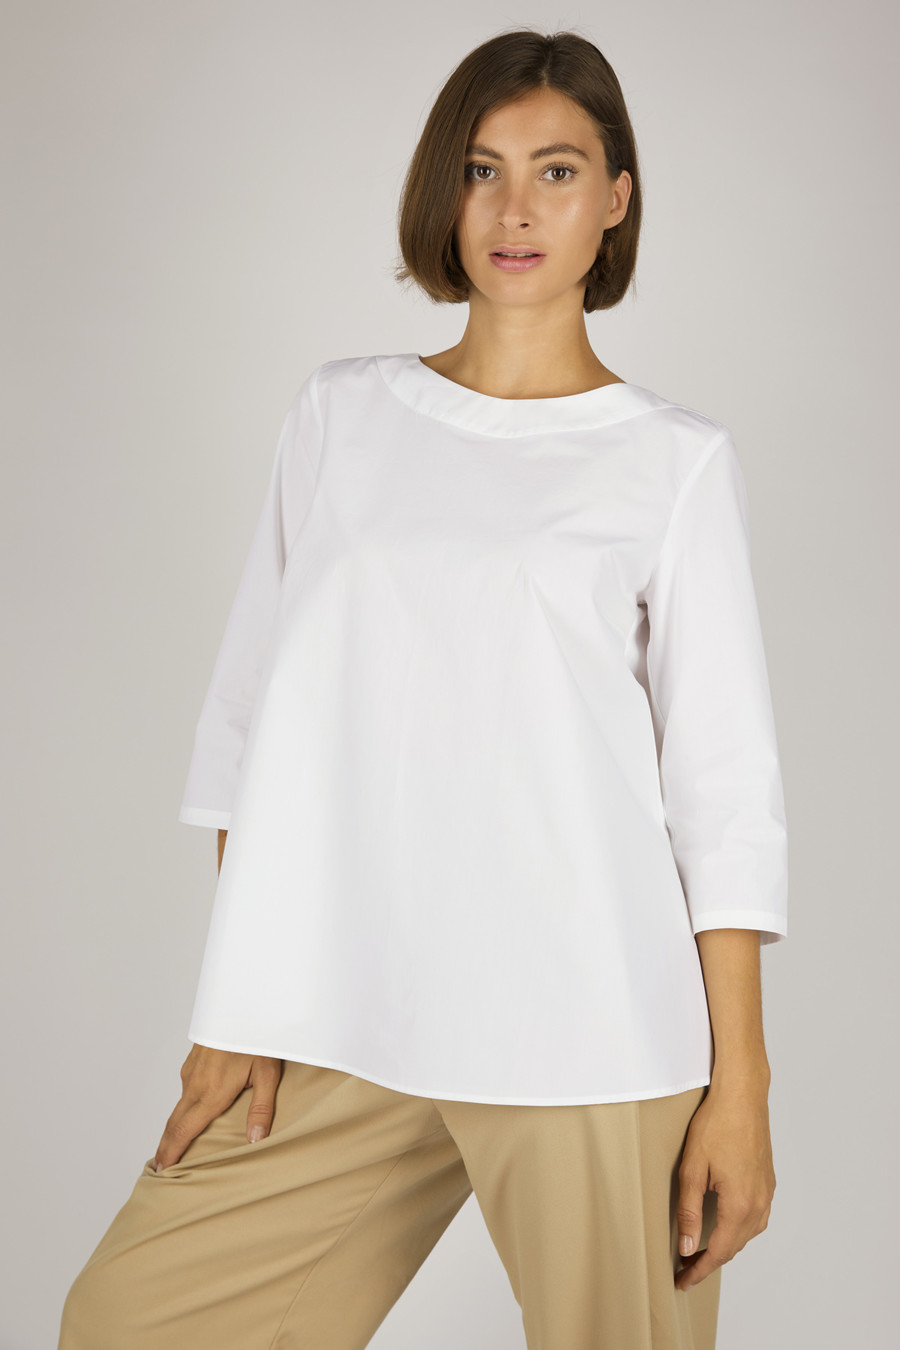 ALISON – Wide shirt in organic cotton – Color: White